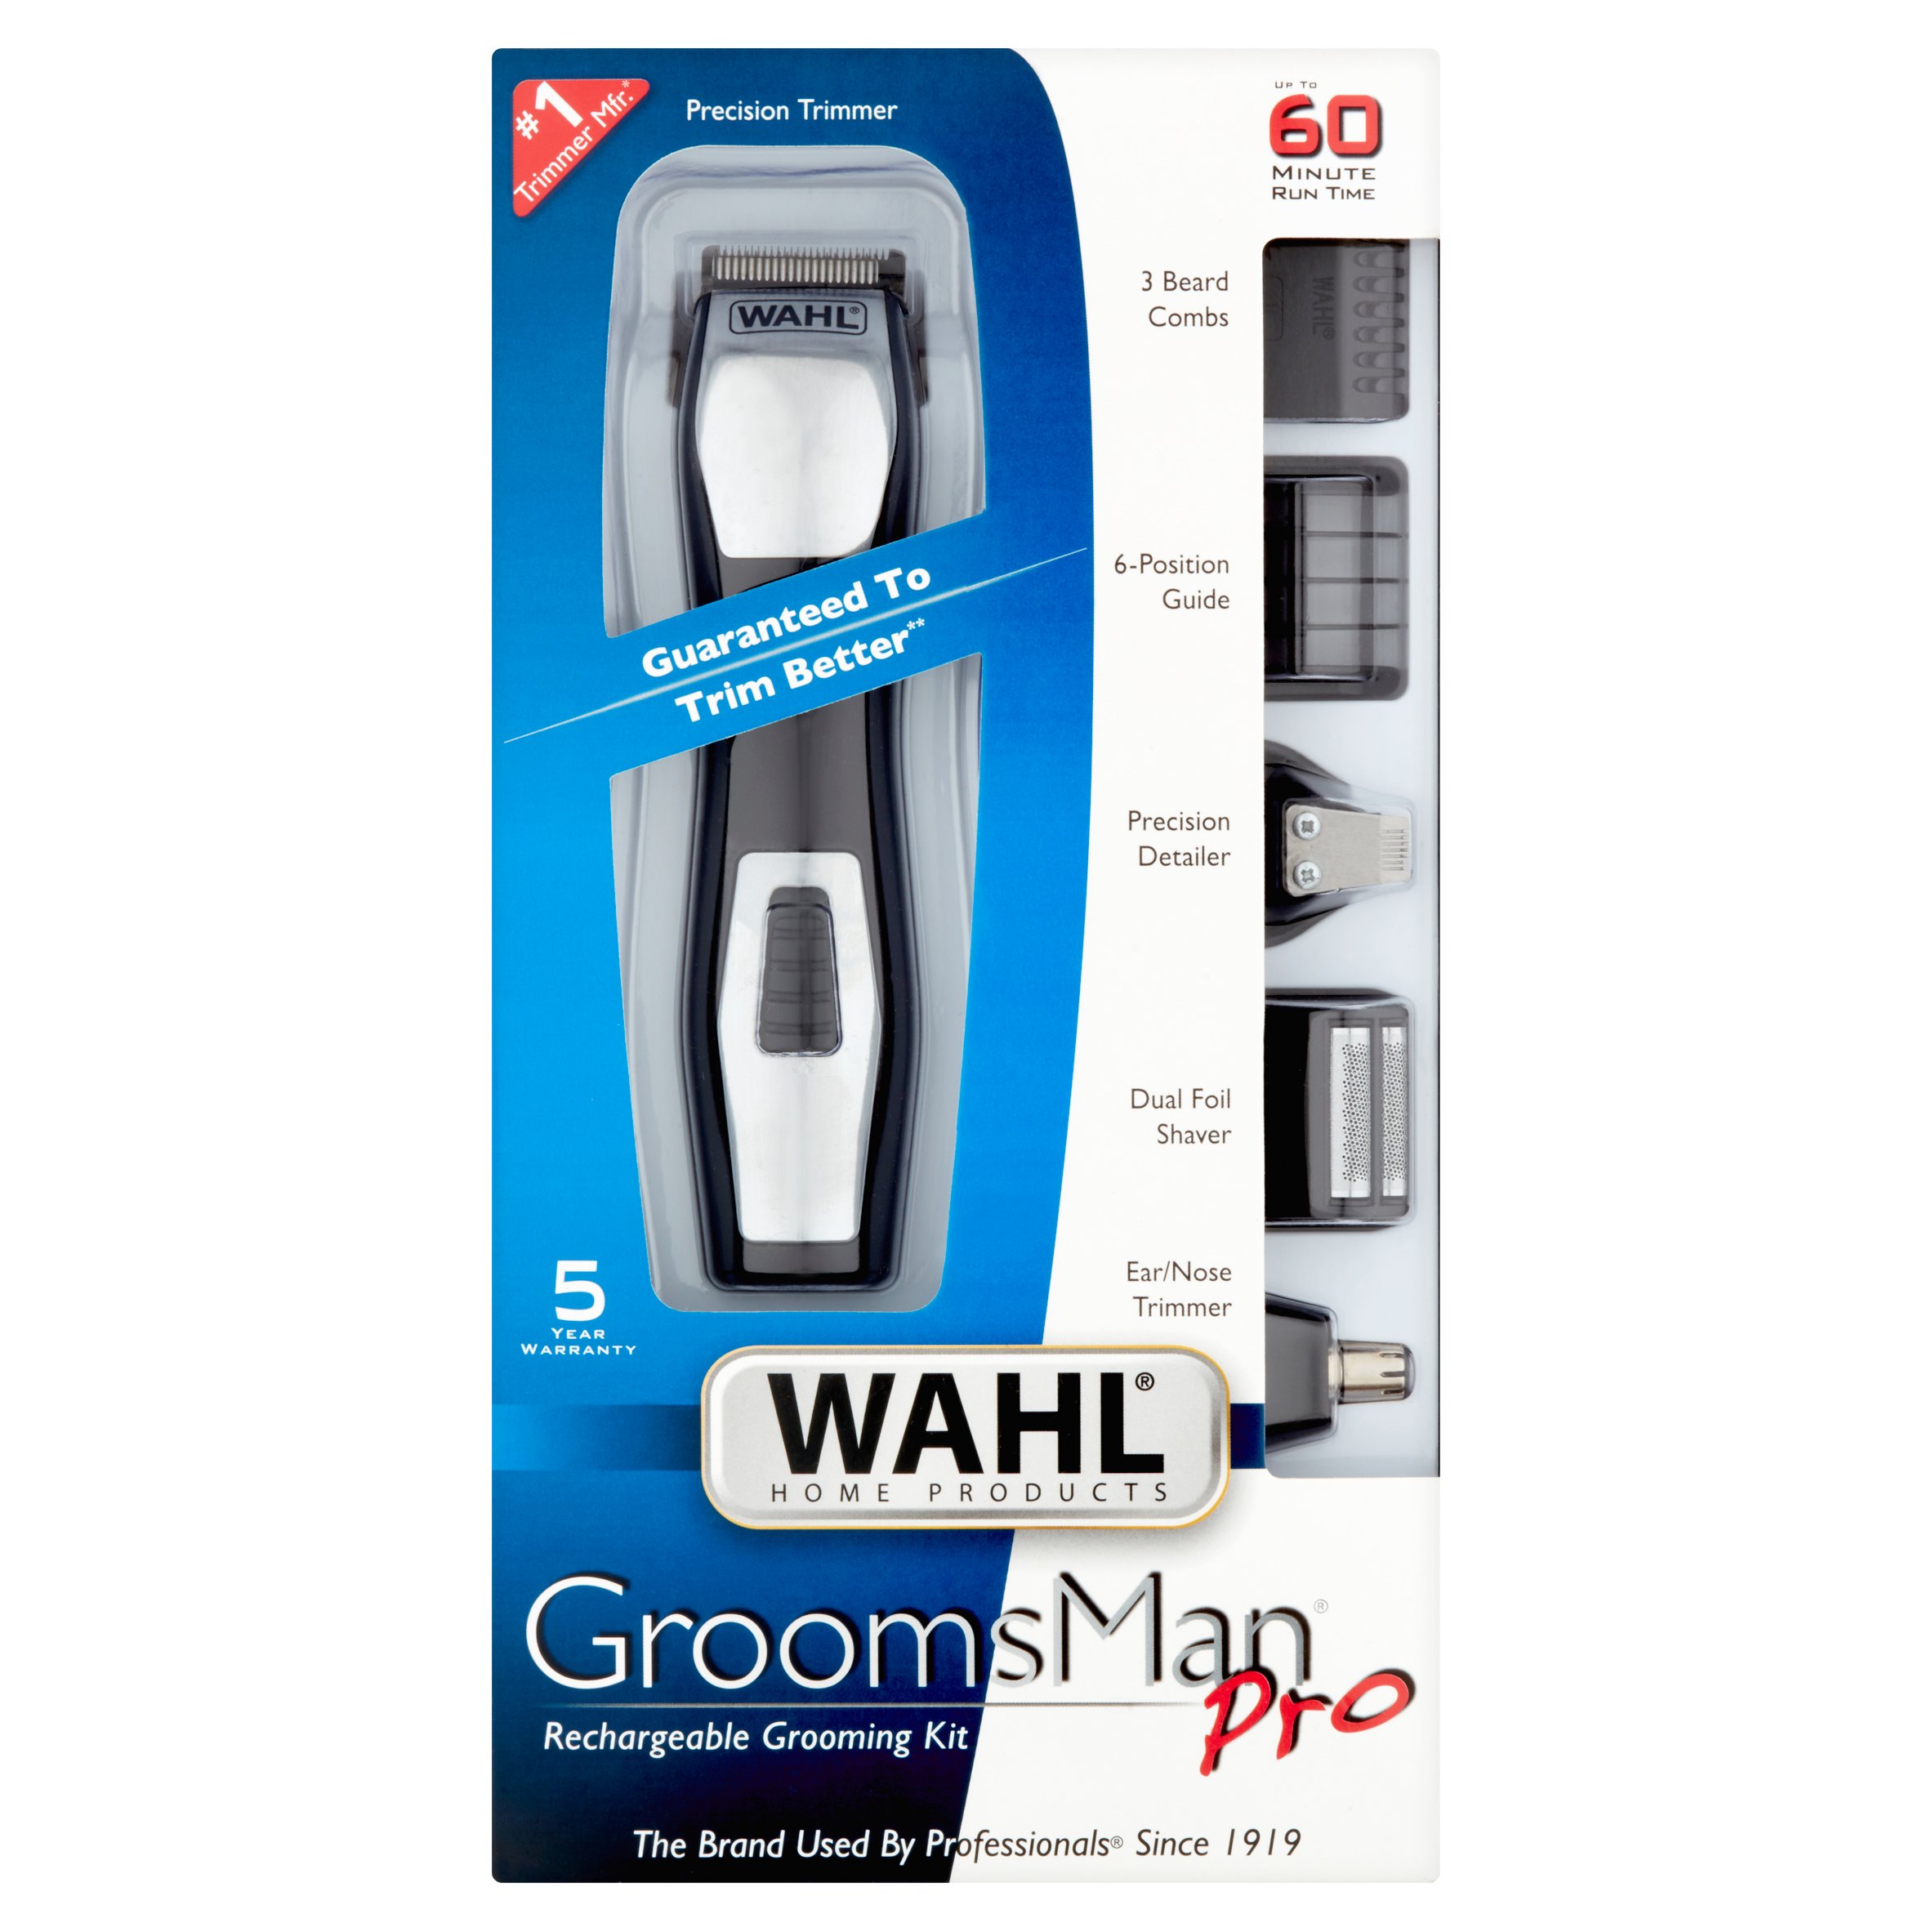 Wahl Groomsman Pro Rechargeable Grooming Kit #9855-300 - image 1 of 4